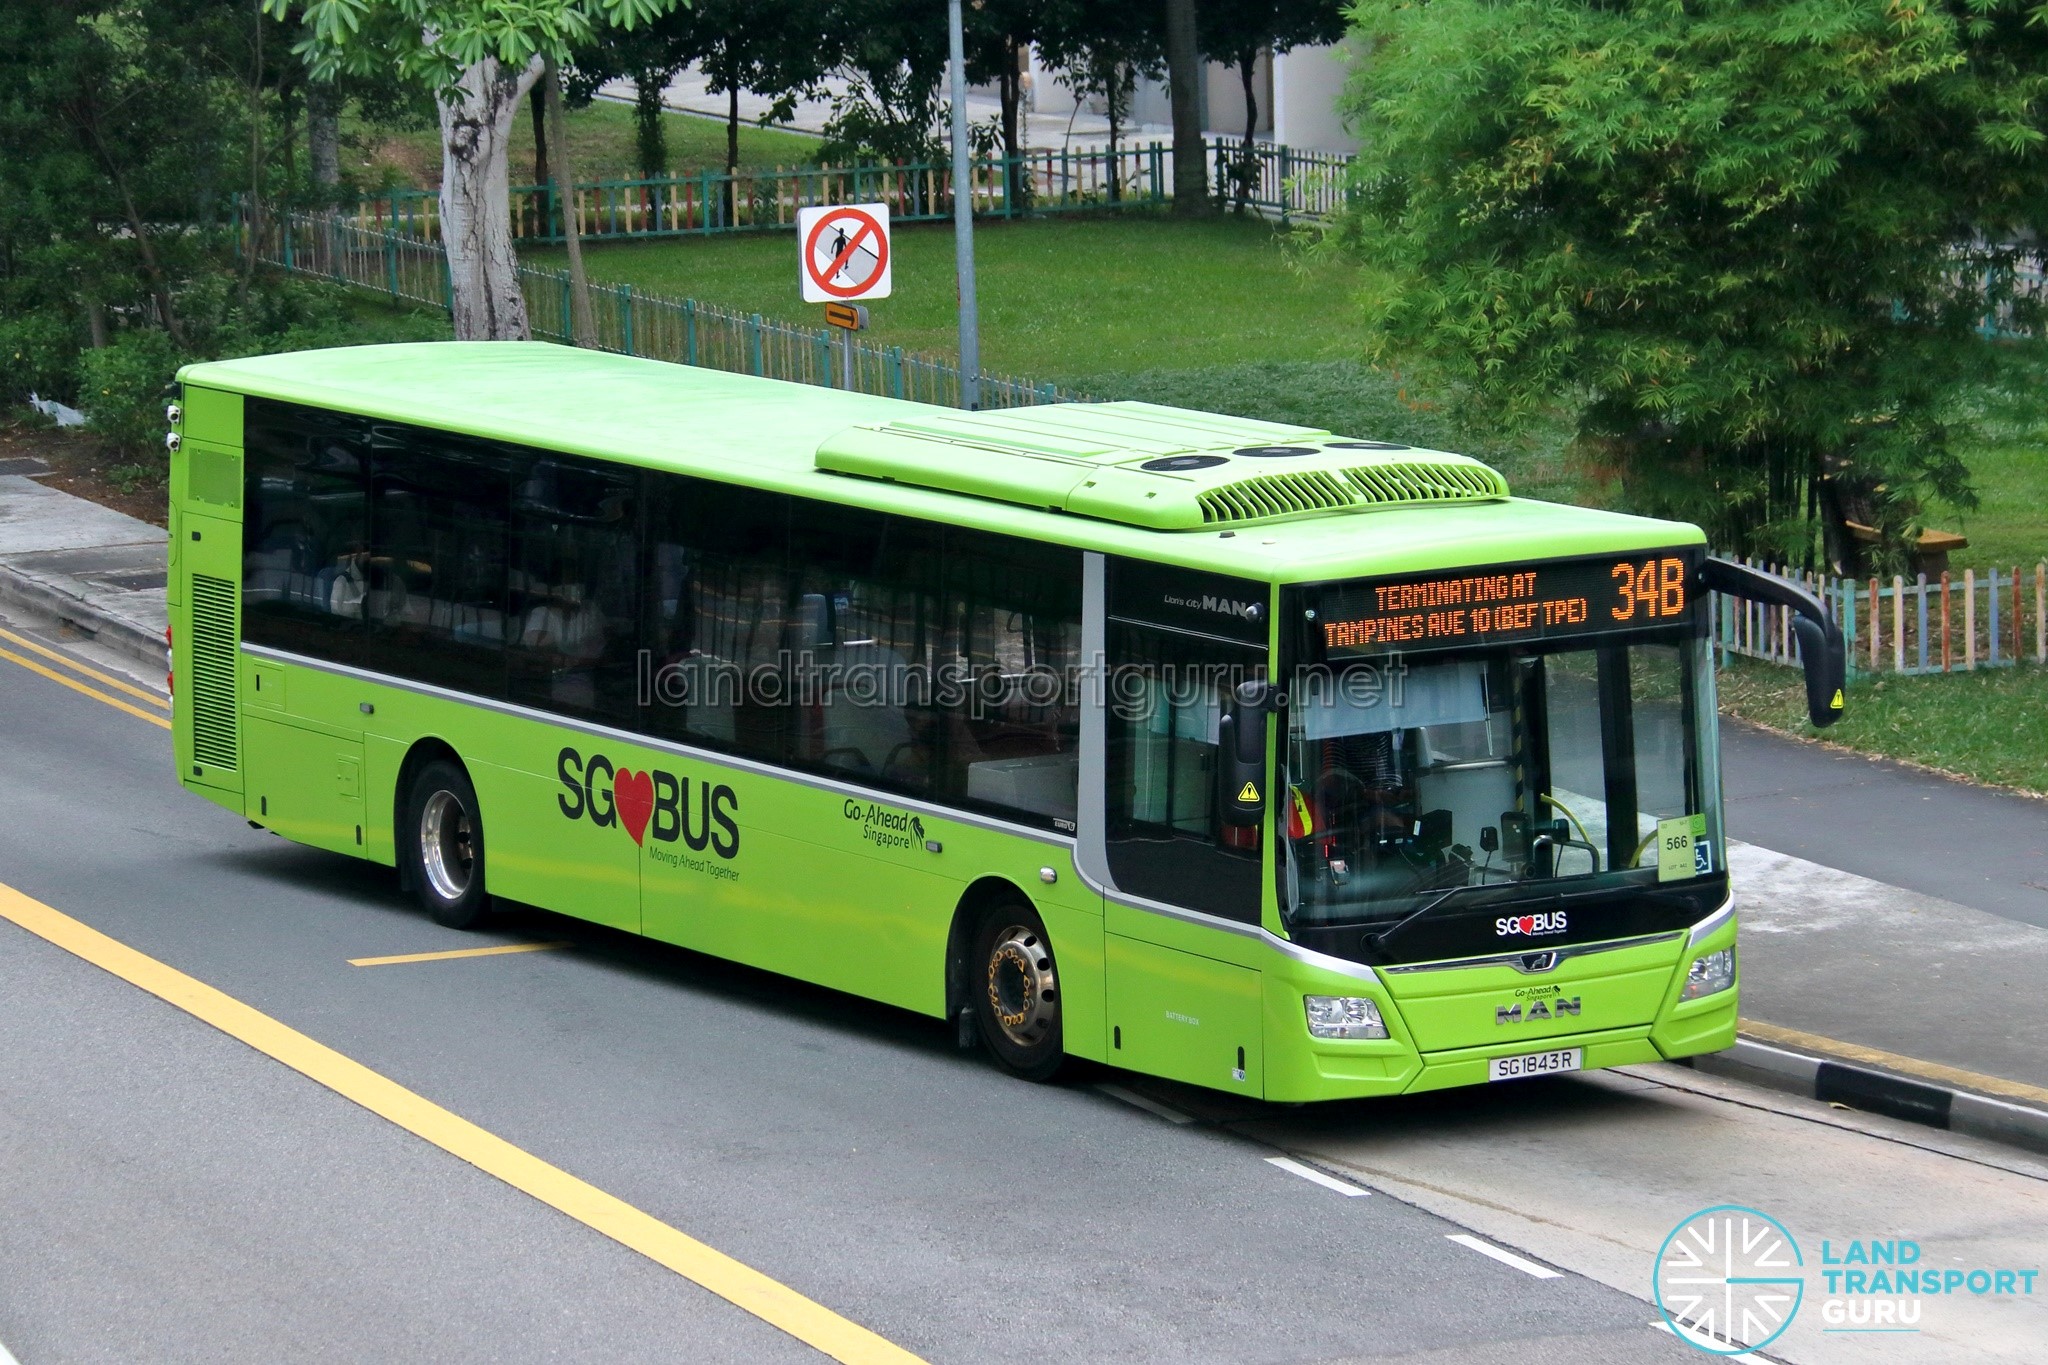 Go-Ahead Bus Service 34B